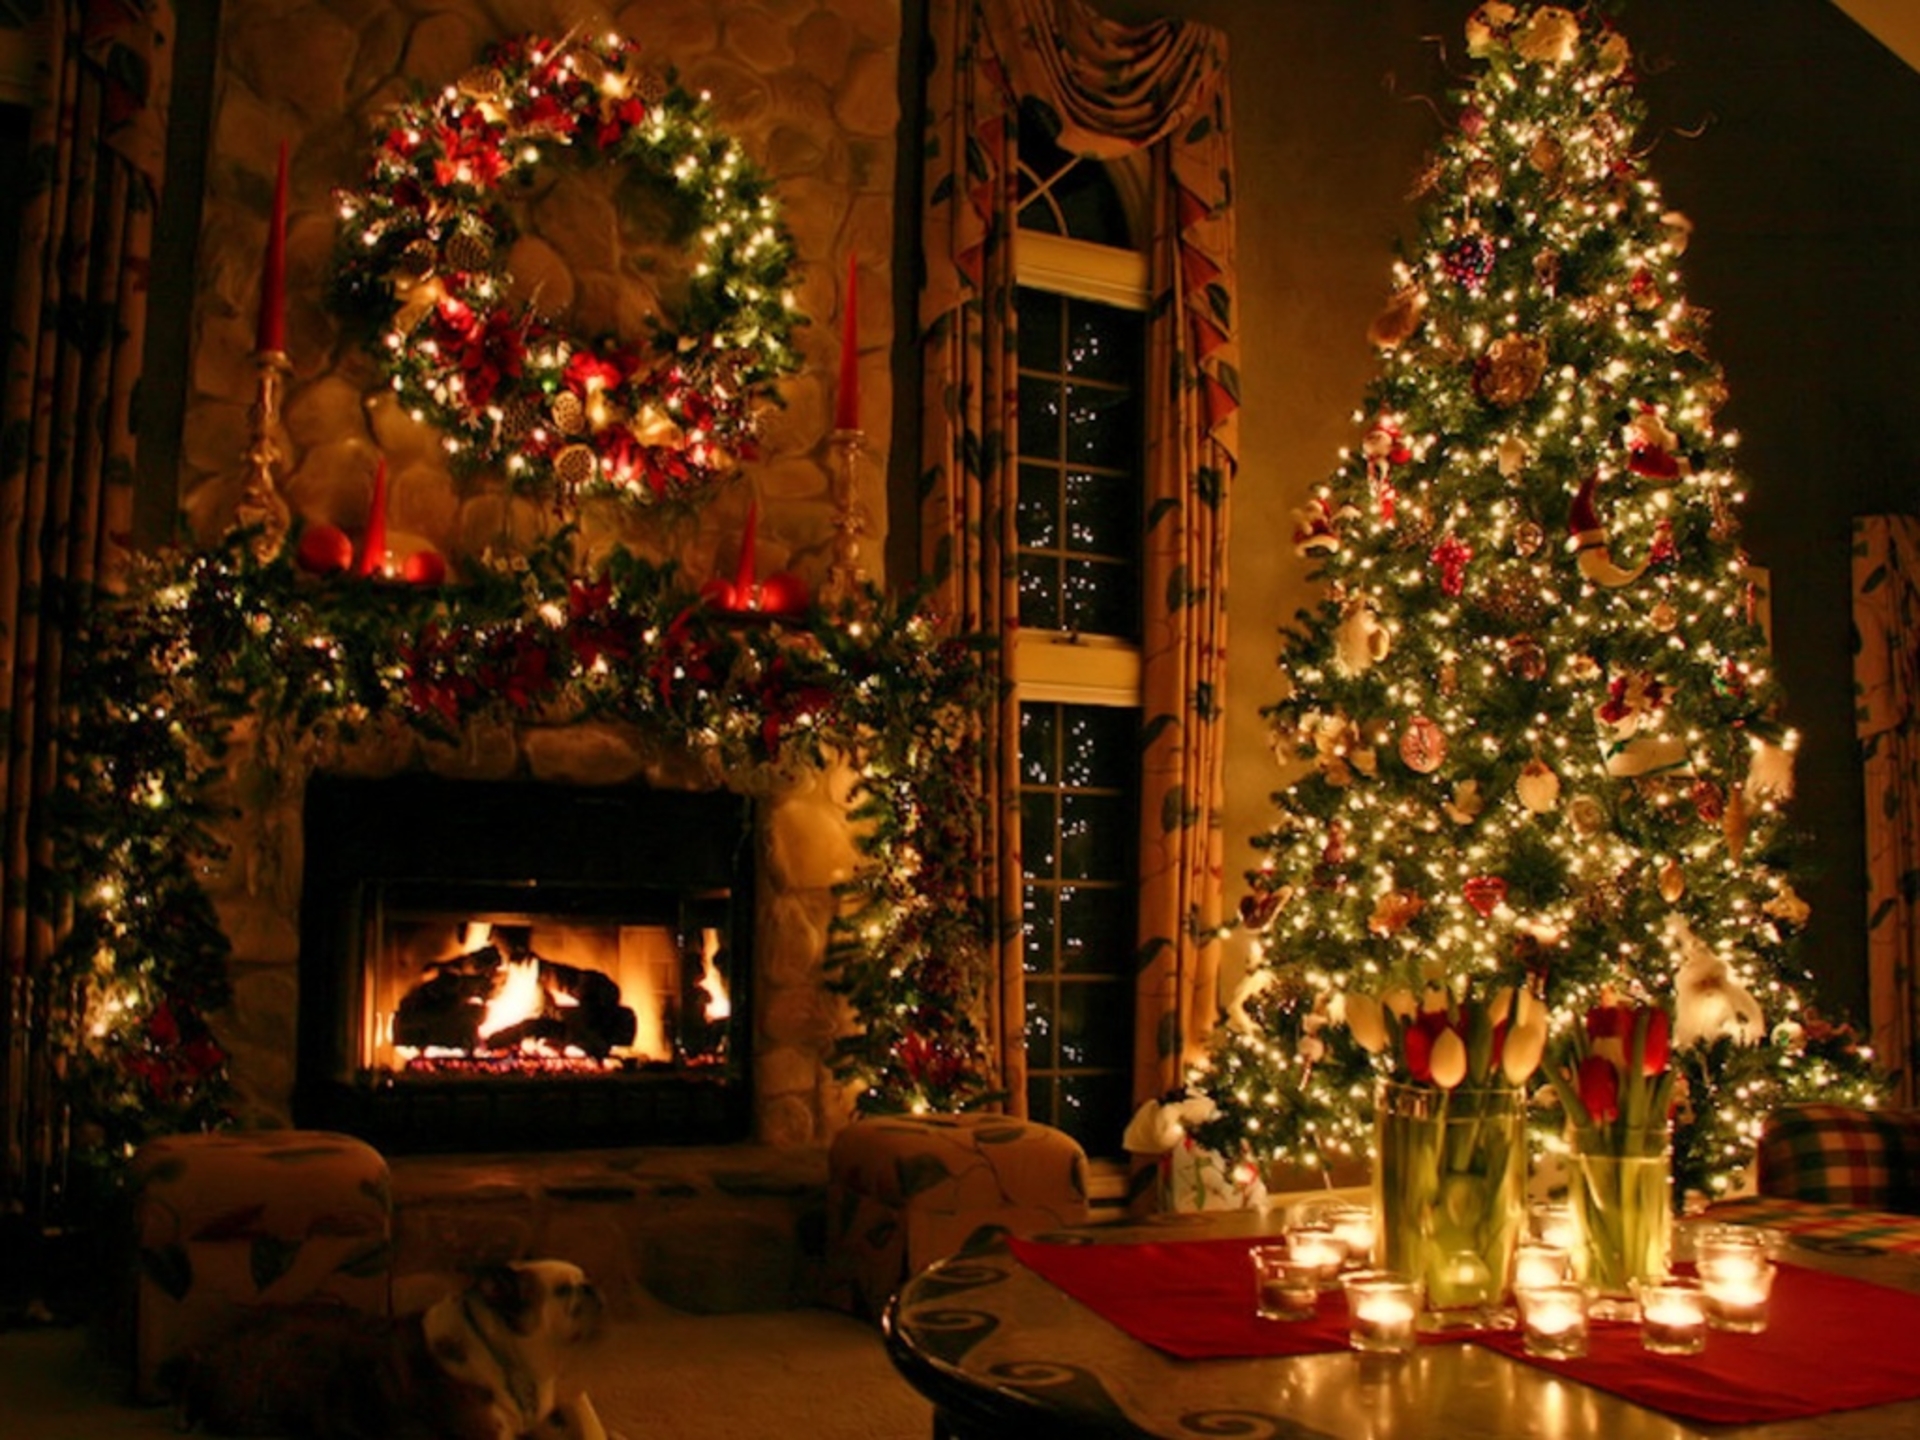 Christmas Fireplace Fire Holiday Festive Decorations Hx